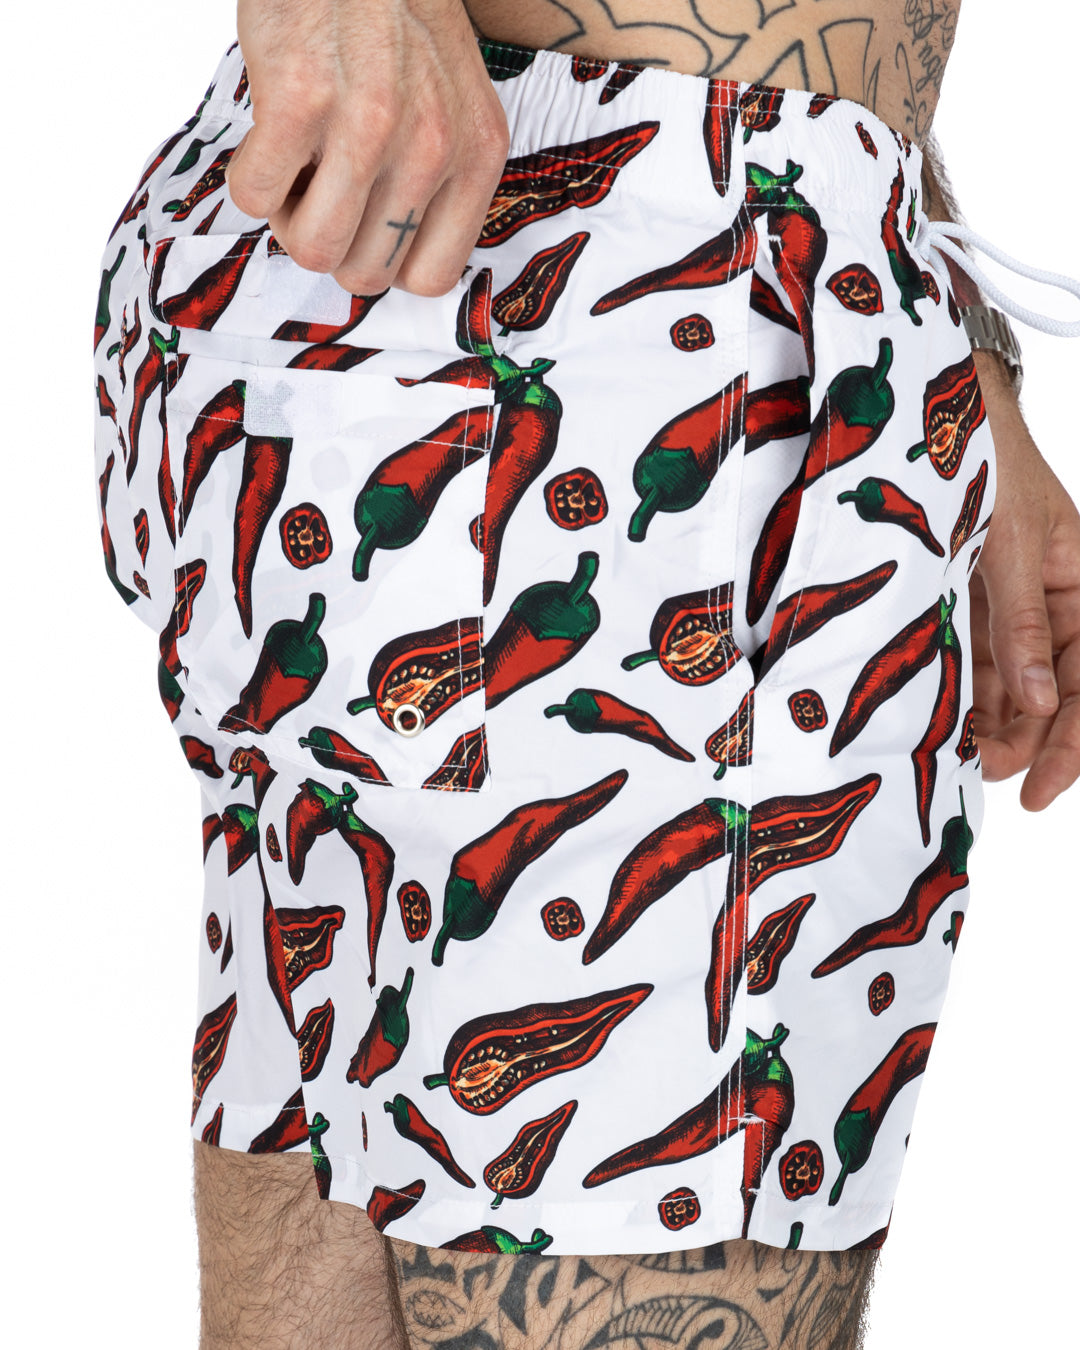 Swimsuit - White chili pepper pattern